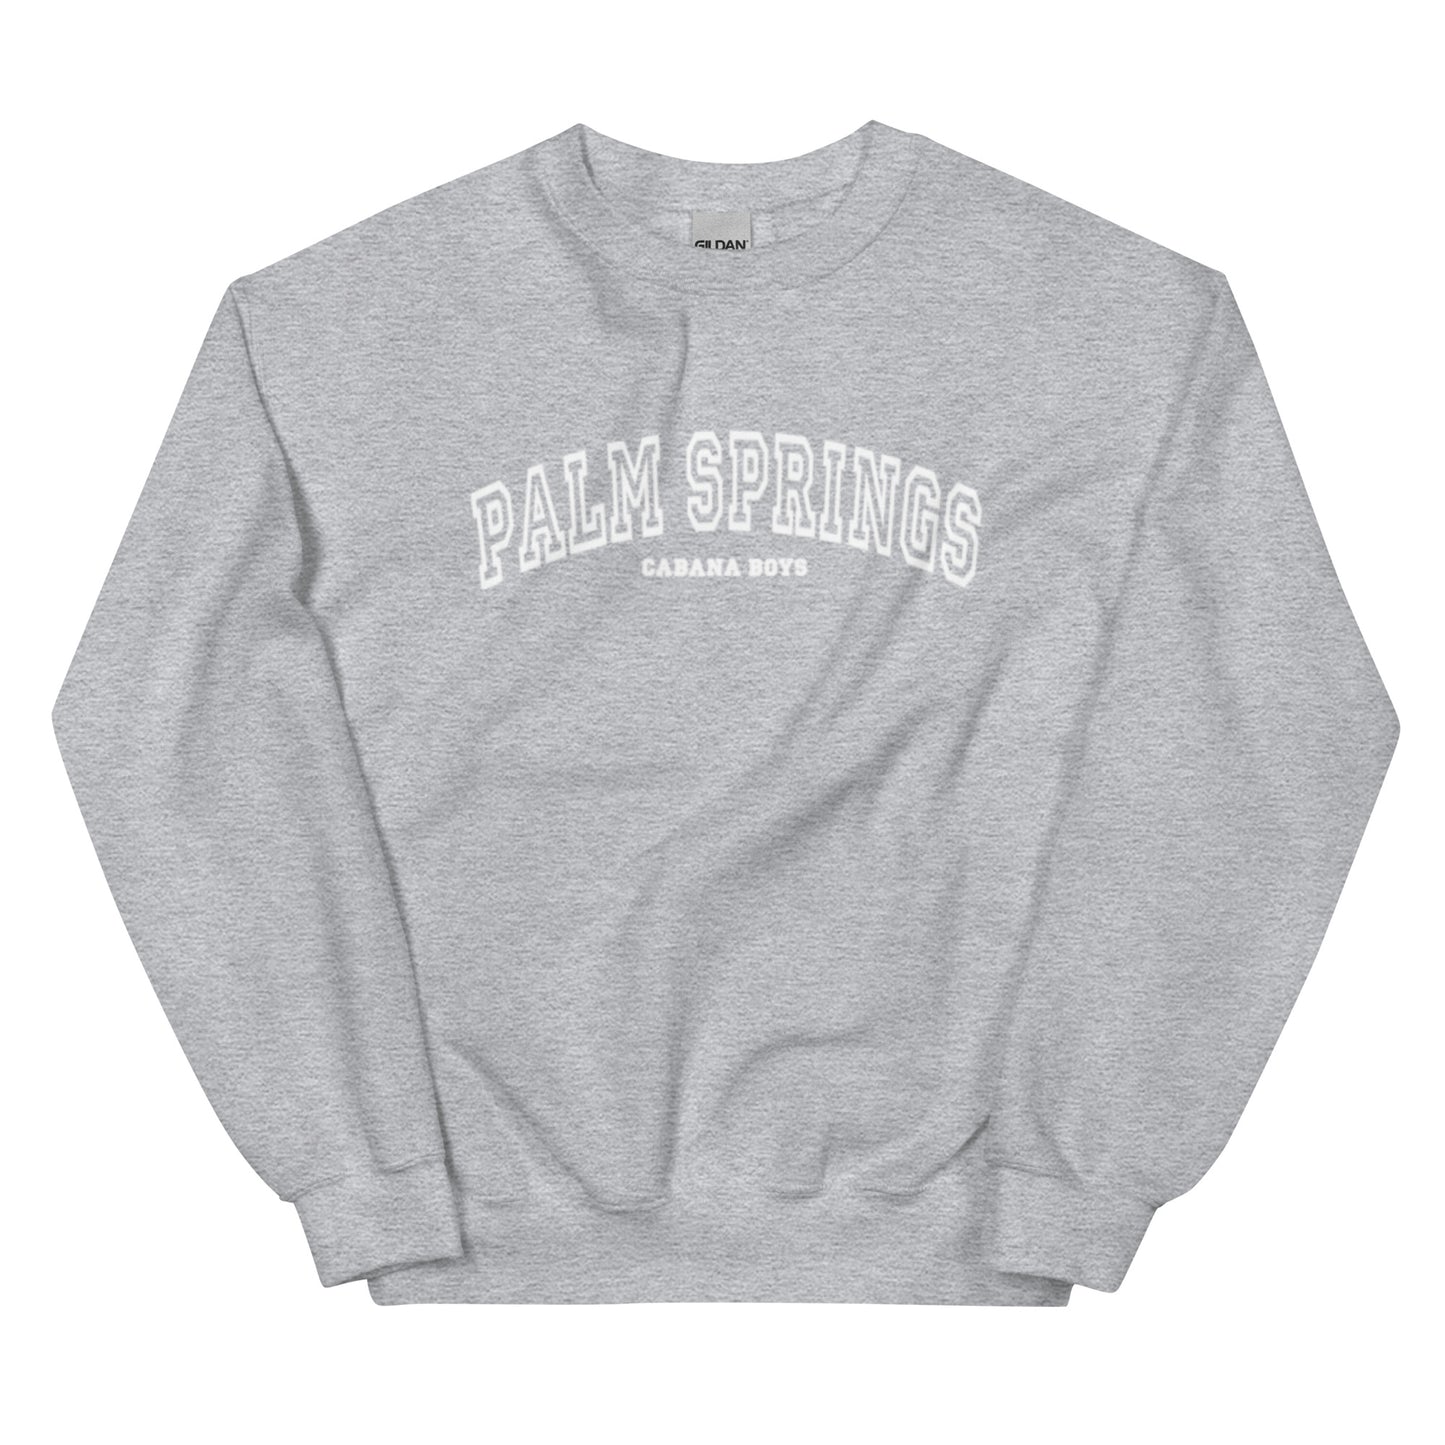 Collegiate Collection Palm Springs Sweatshirt